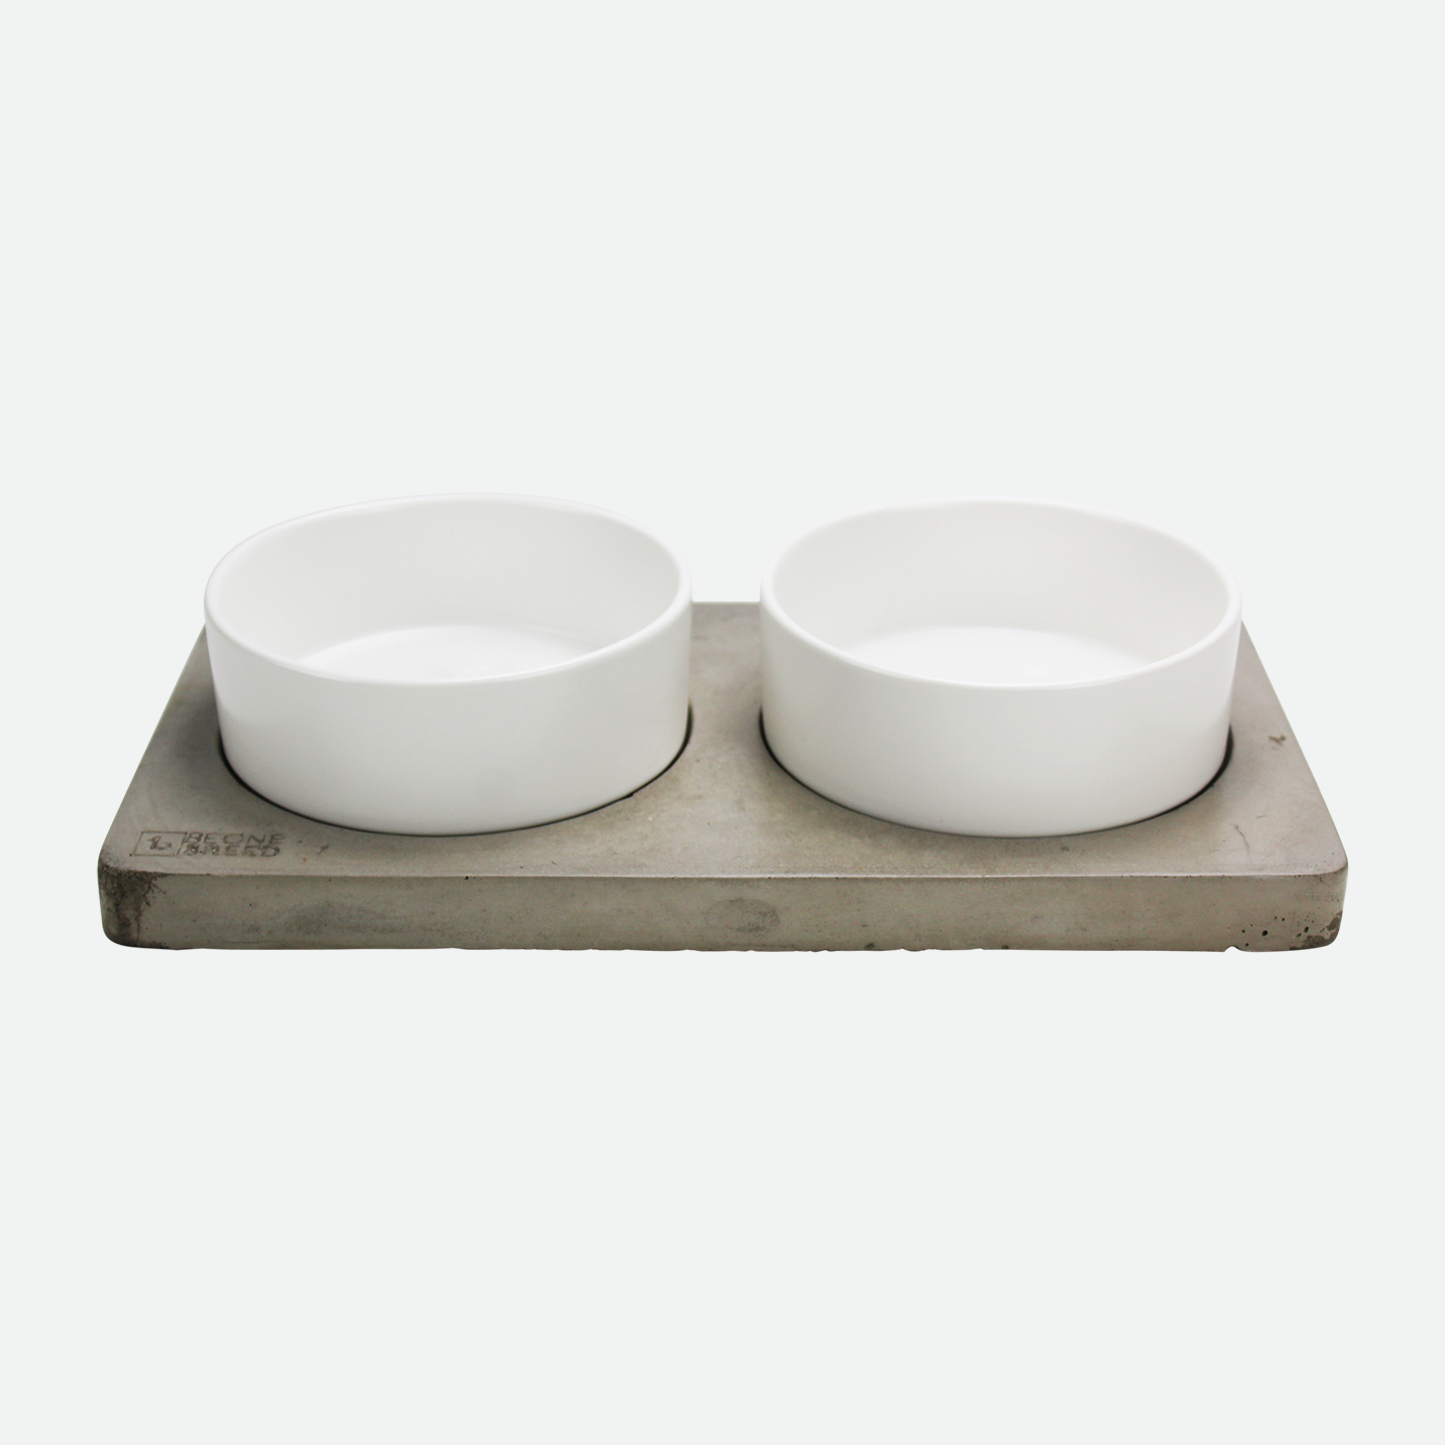 White ceramic pet bowls on concrete base